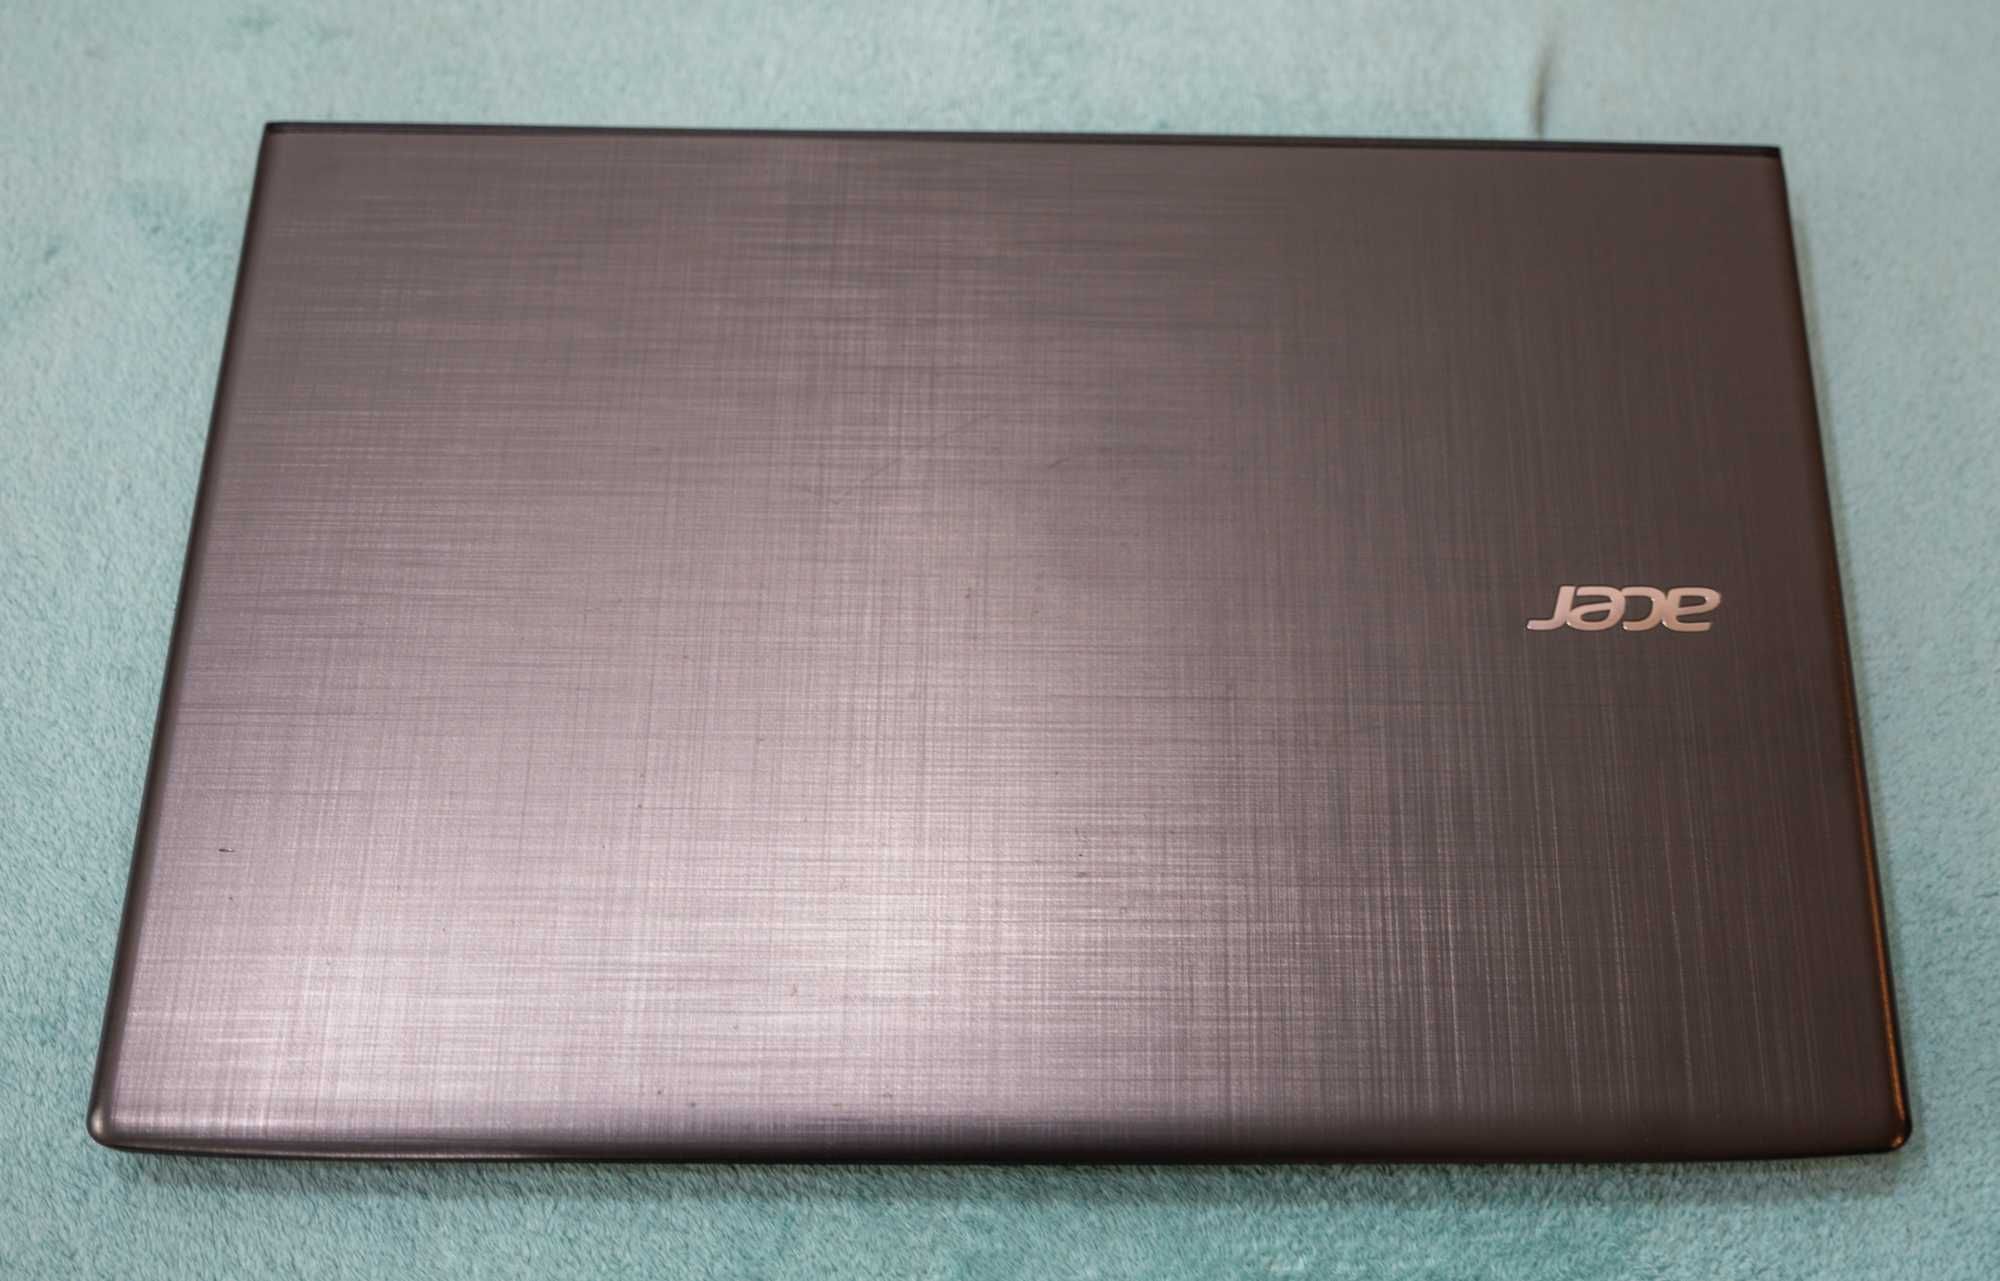 Laptop Acer Aspire E5-575G-789J, 8GB DDR4, i7-7500U, GTX 950M